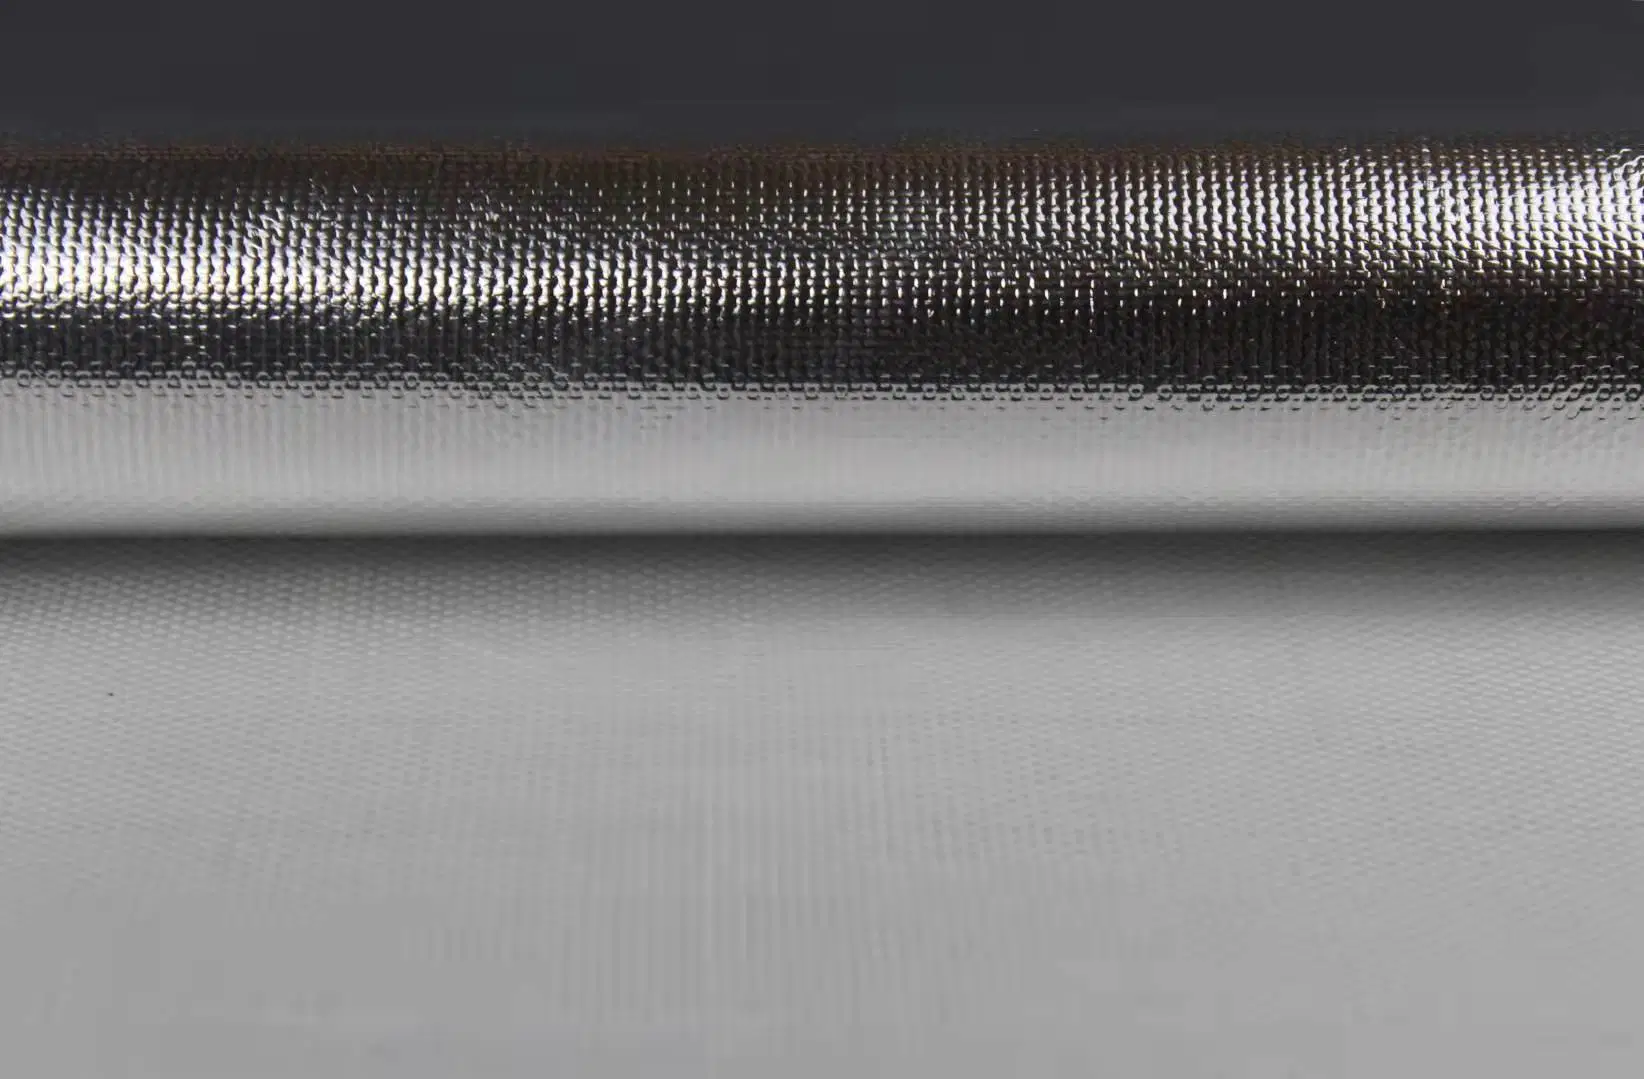 Aluminiumfolie Beschichtetes Wärmedämmgewebe Aus Fiberglas